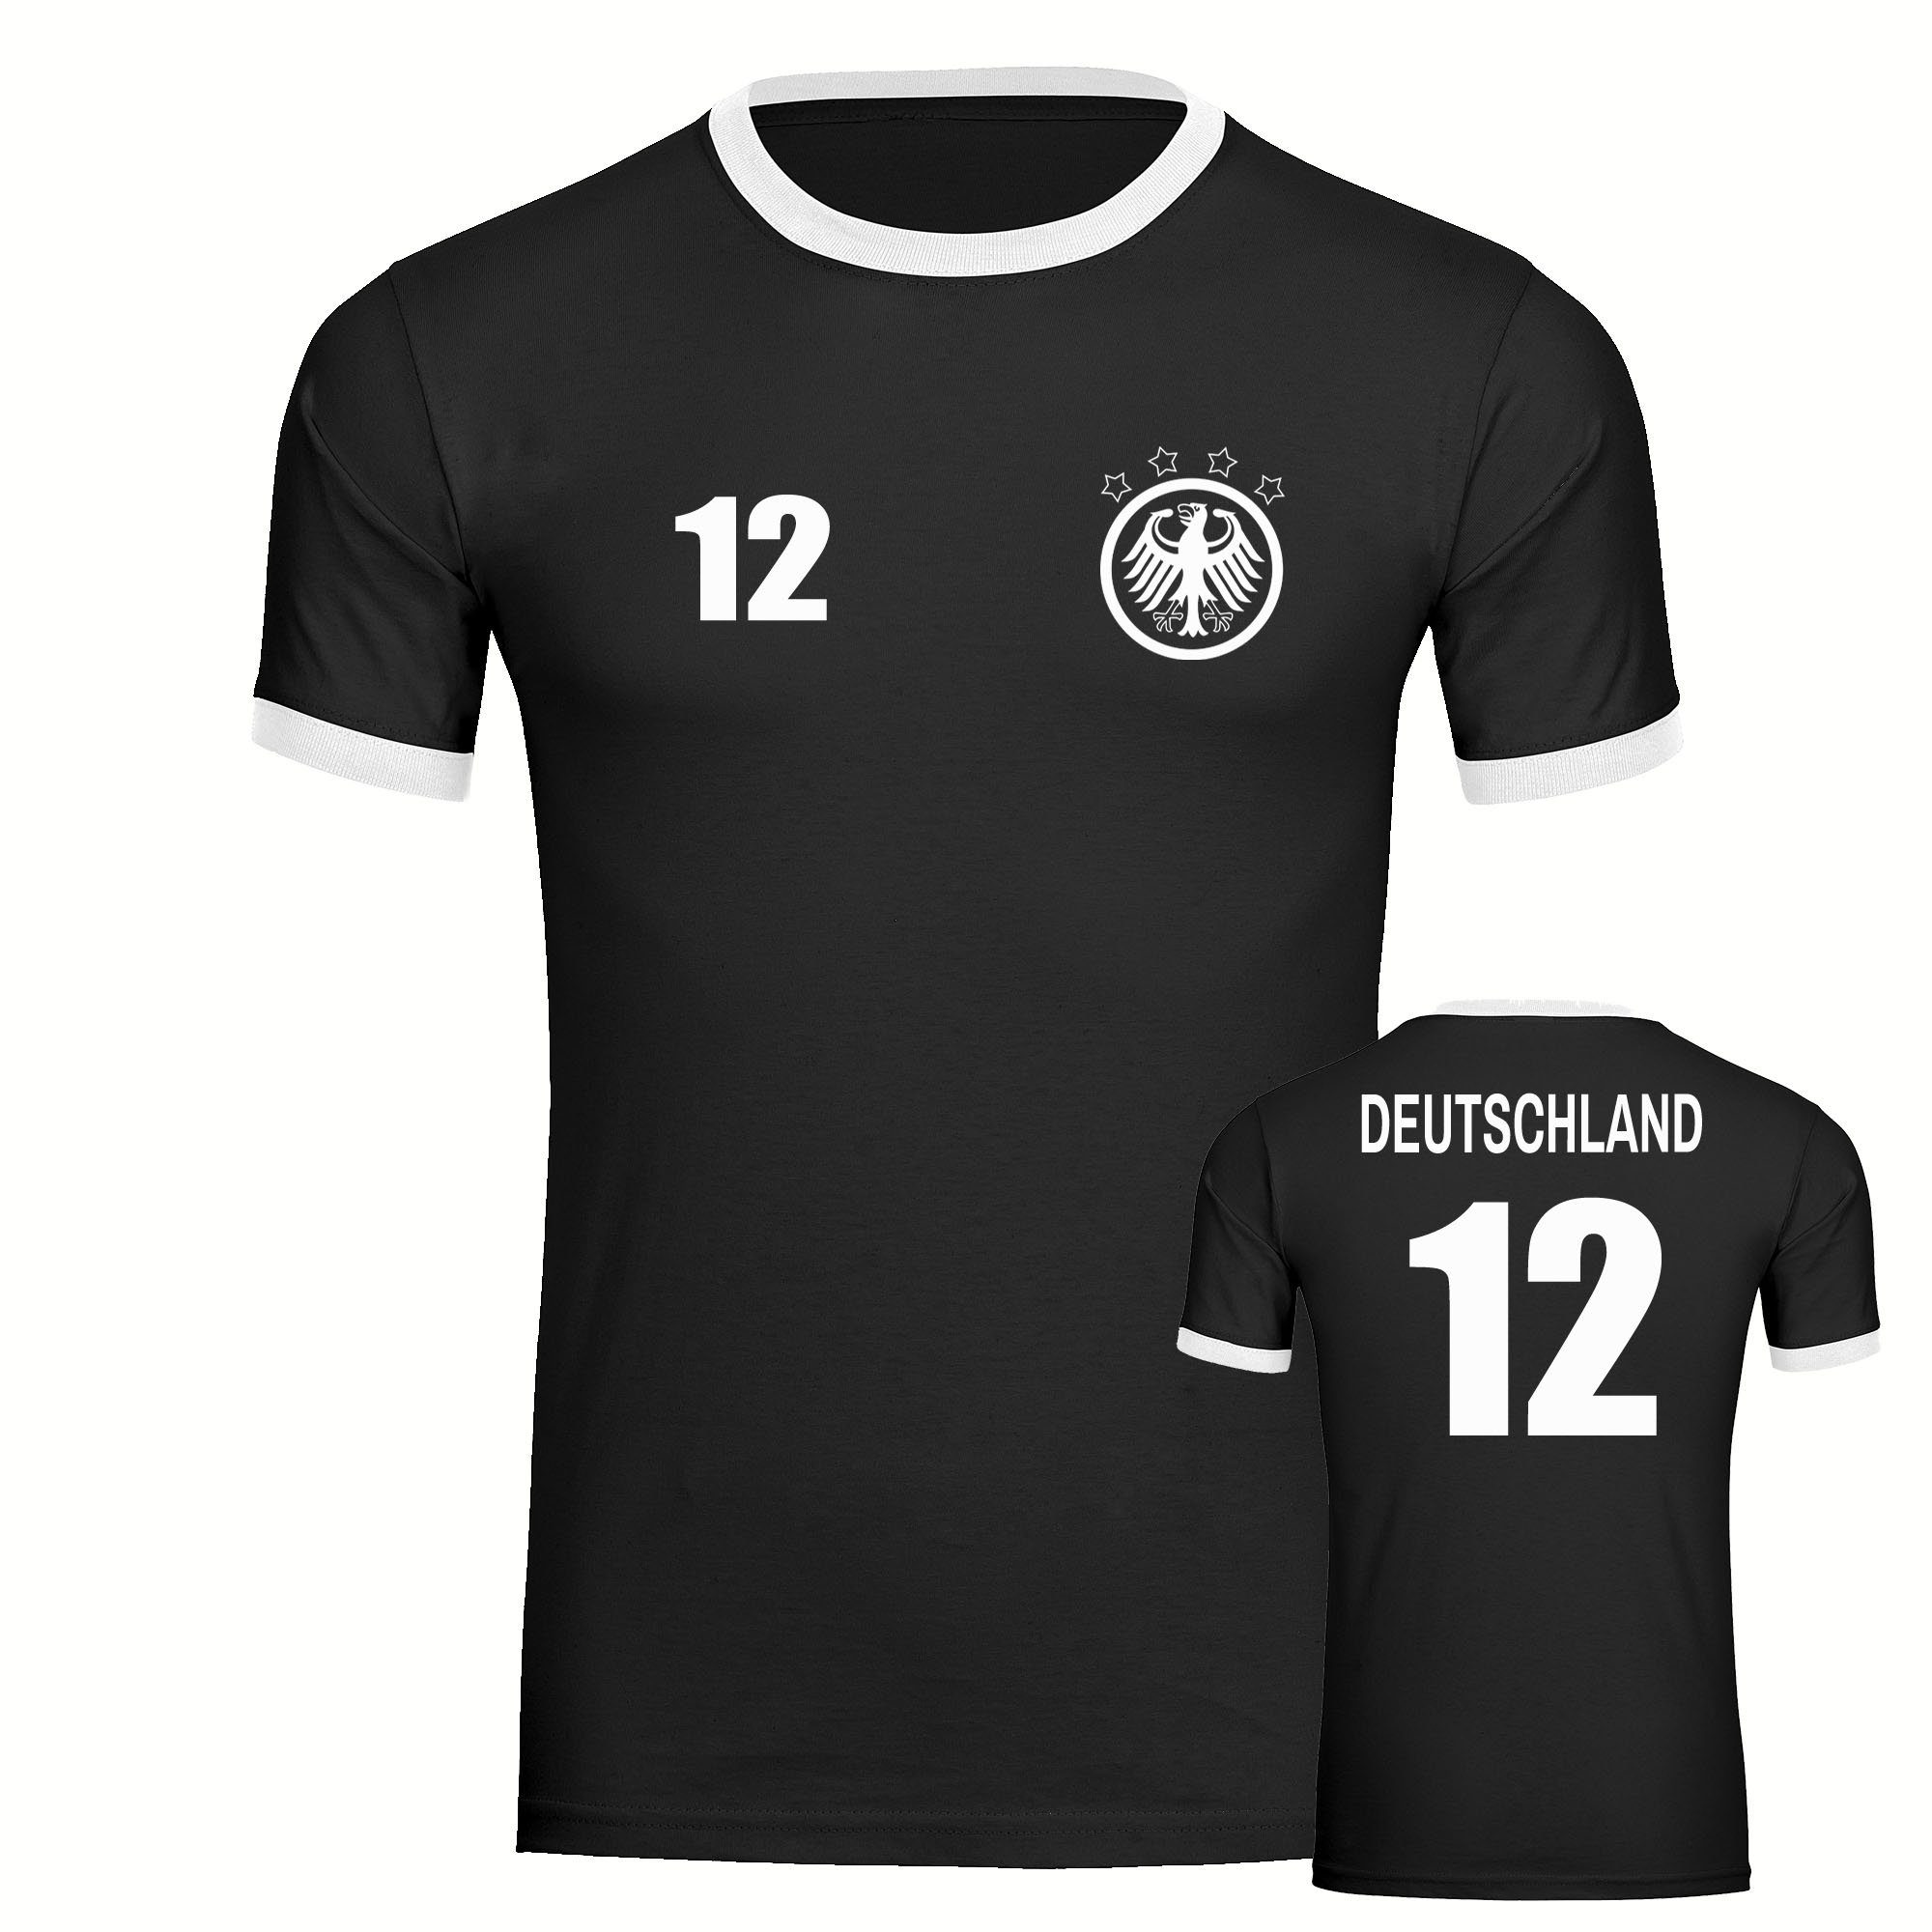 multifanshop T-Shirt Kontrast Deutschland - Adler Retro Trikot 12 - Männer